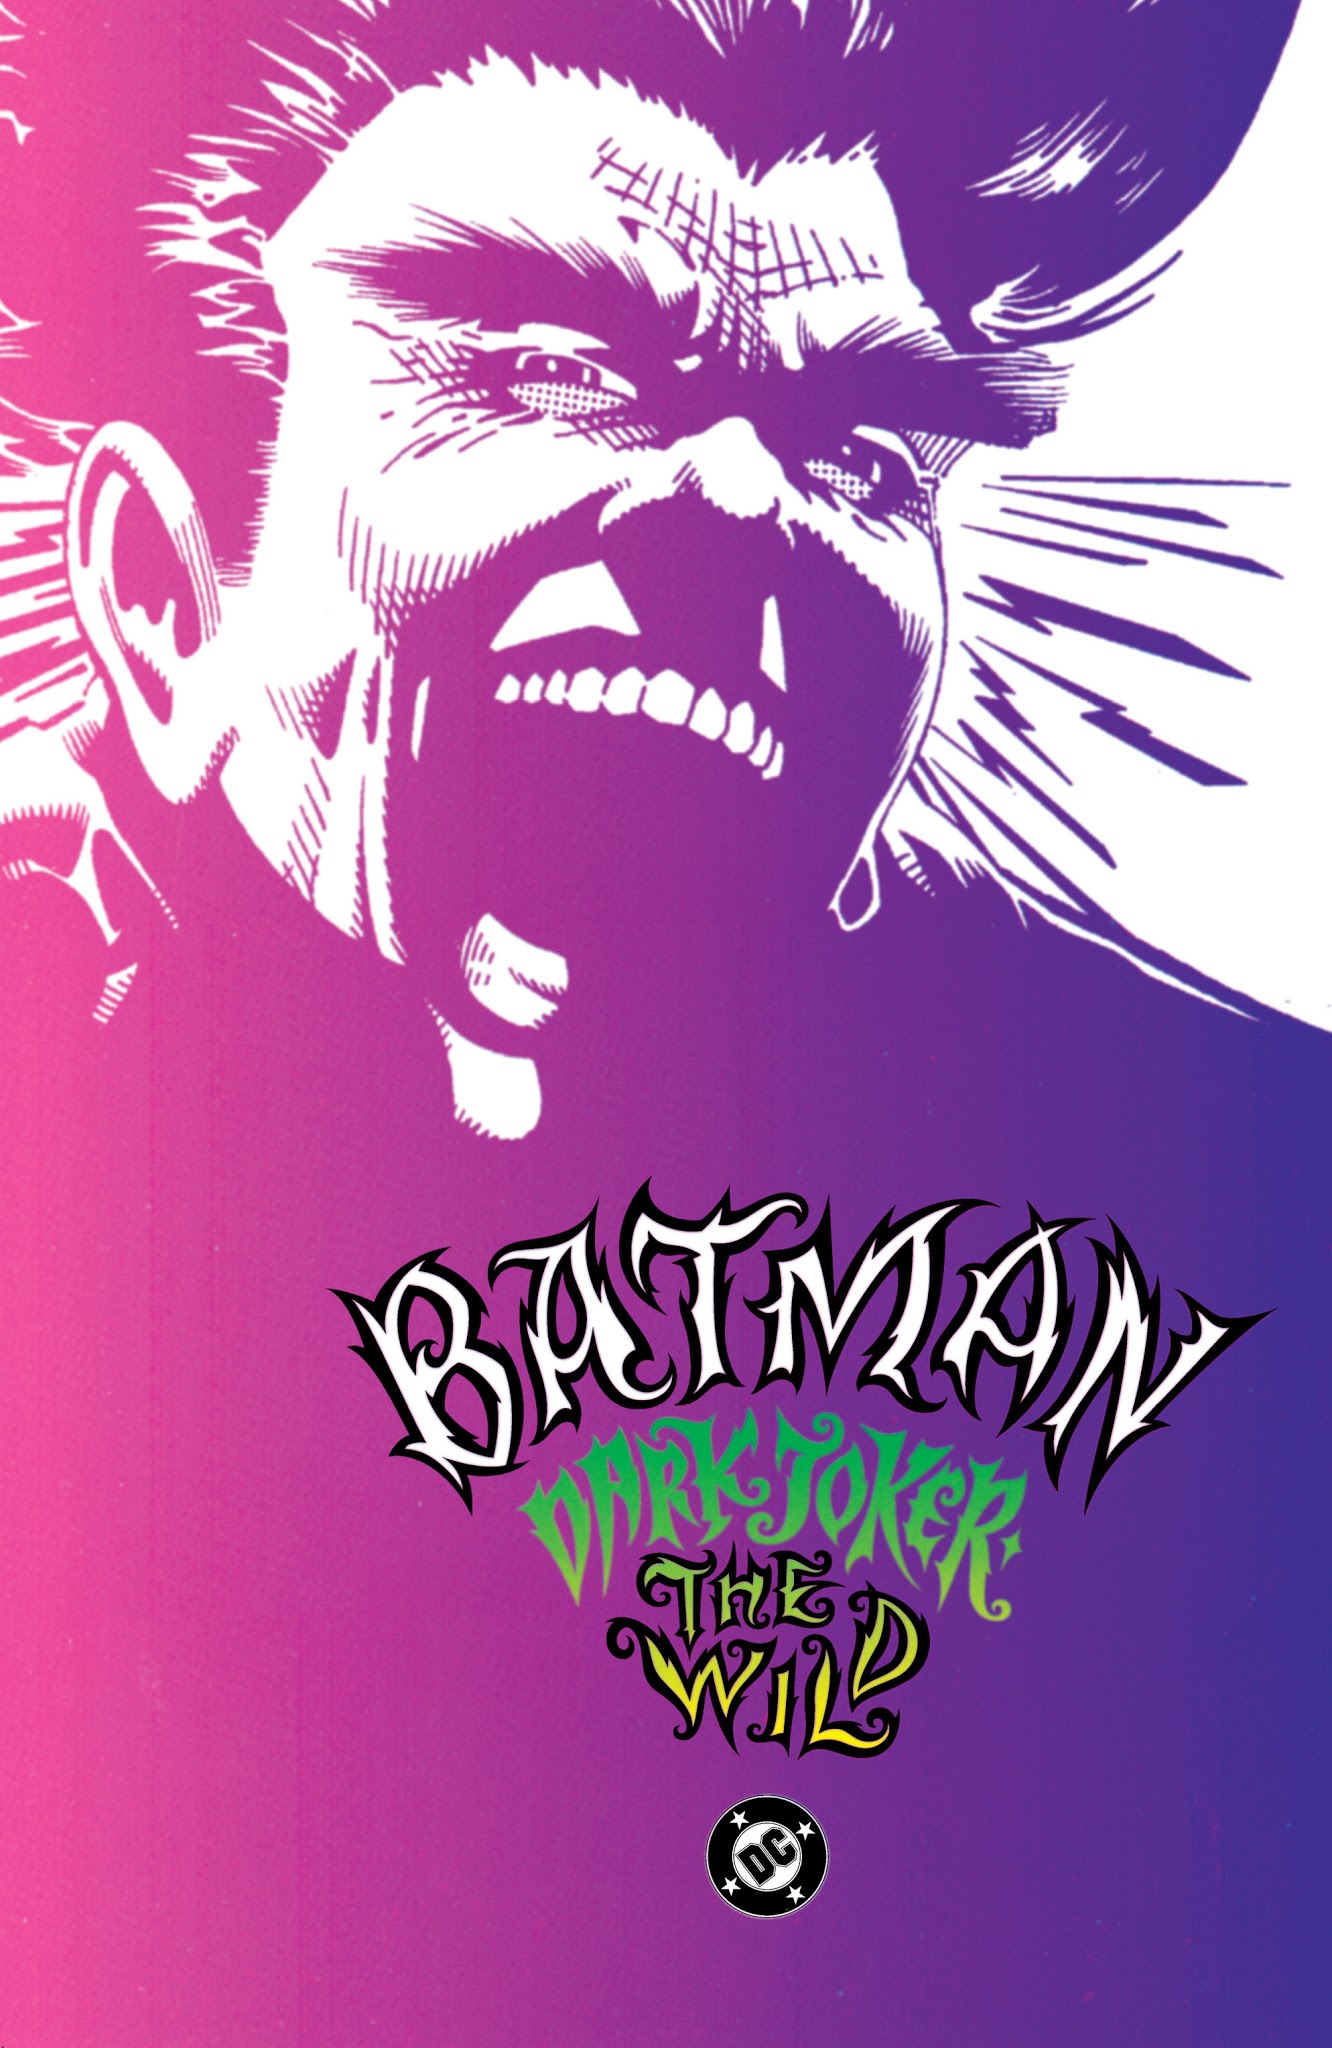 Read online Batman: Dark Joker - The Wild comic -  Issue # TPB - 2